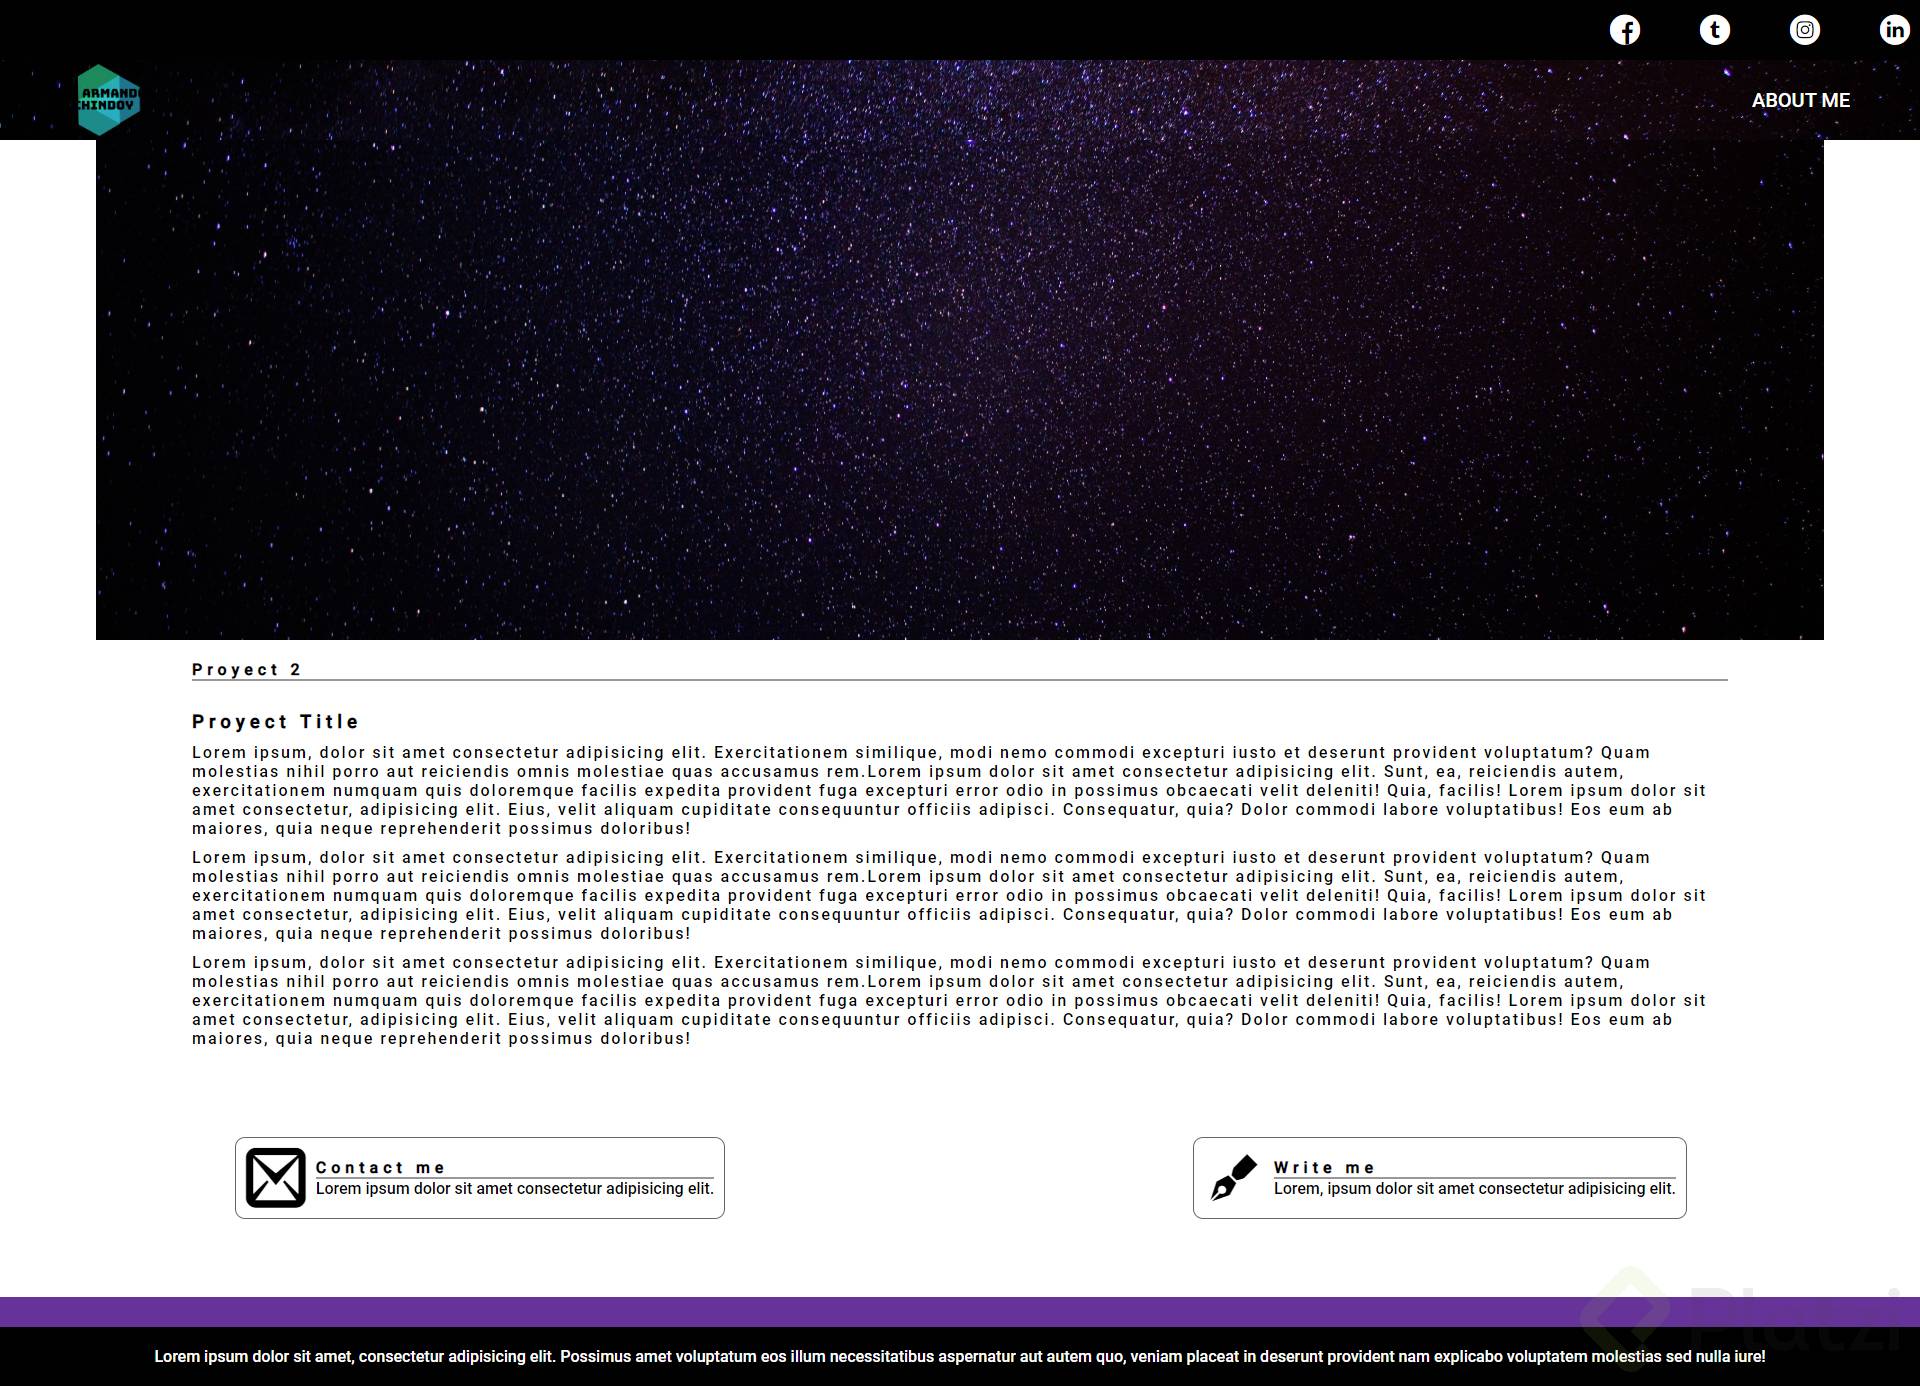 screencapture-file-C-Users-arman-Documents-Platzi-blog-blog-html-2020-06-20-20_57_53.png